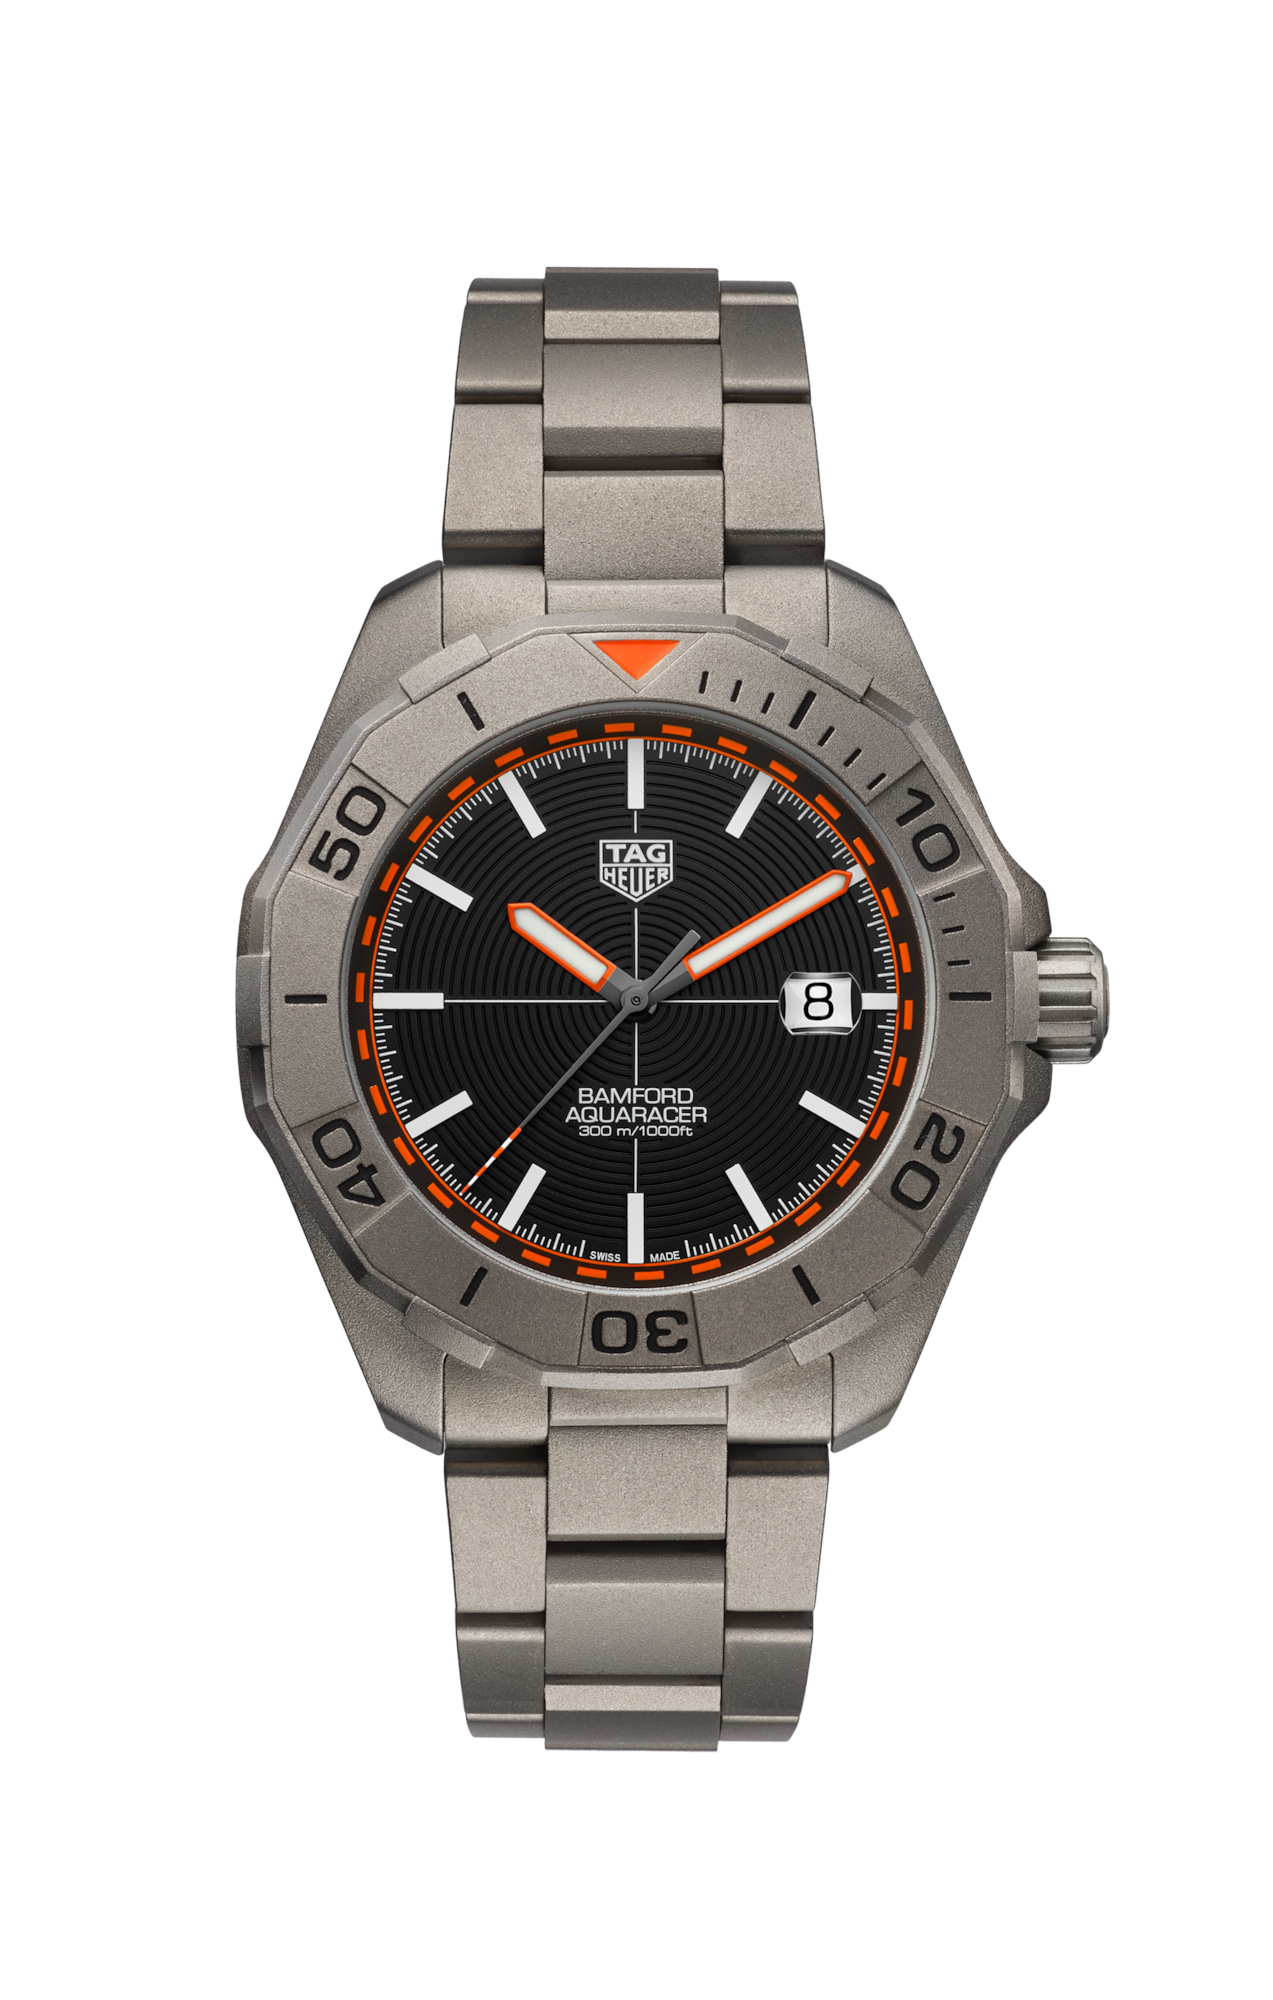 Tag Heuer Aquaracer Bamford Limited Edition Titanium Automatic Men's Watch WAY208F.BF0638